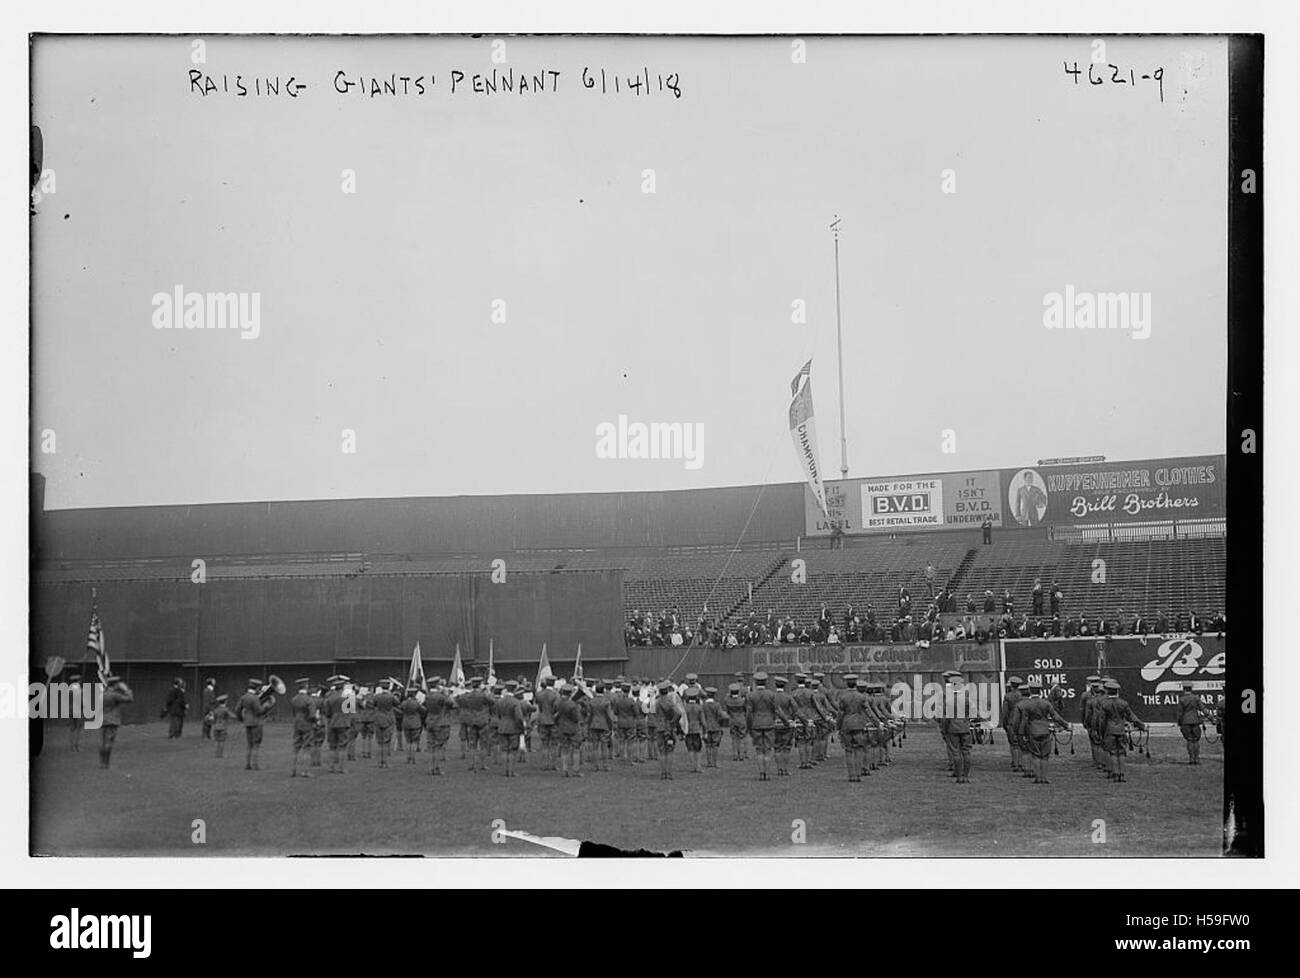 Raising Giants pennant, 6 Stock Photo